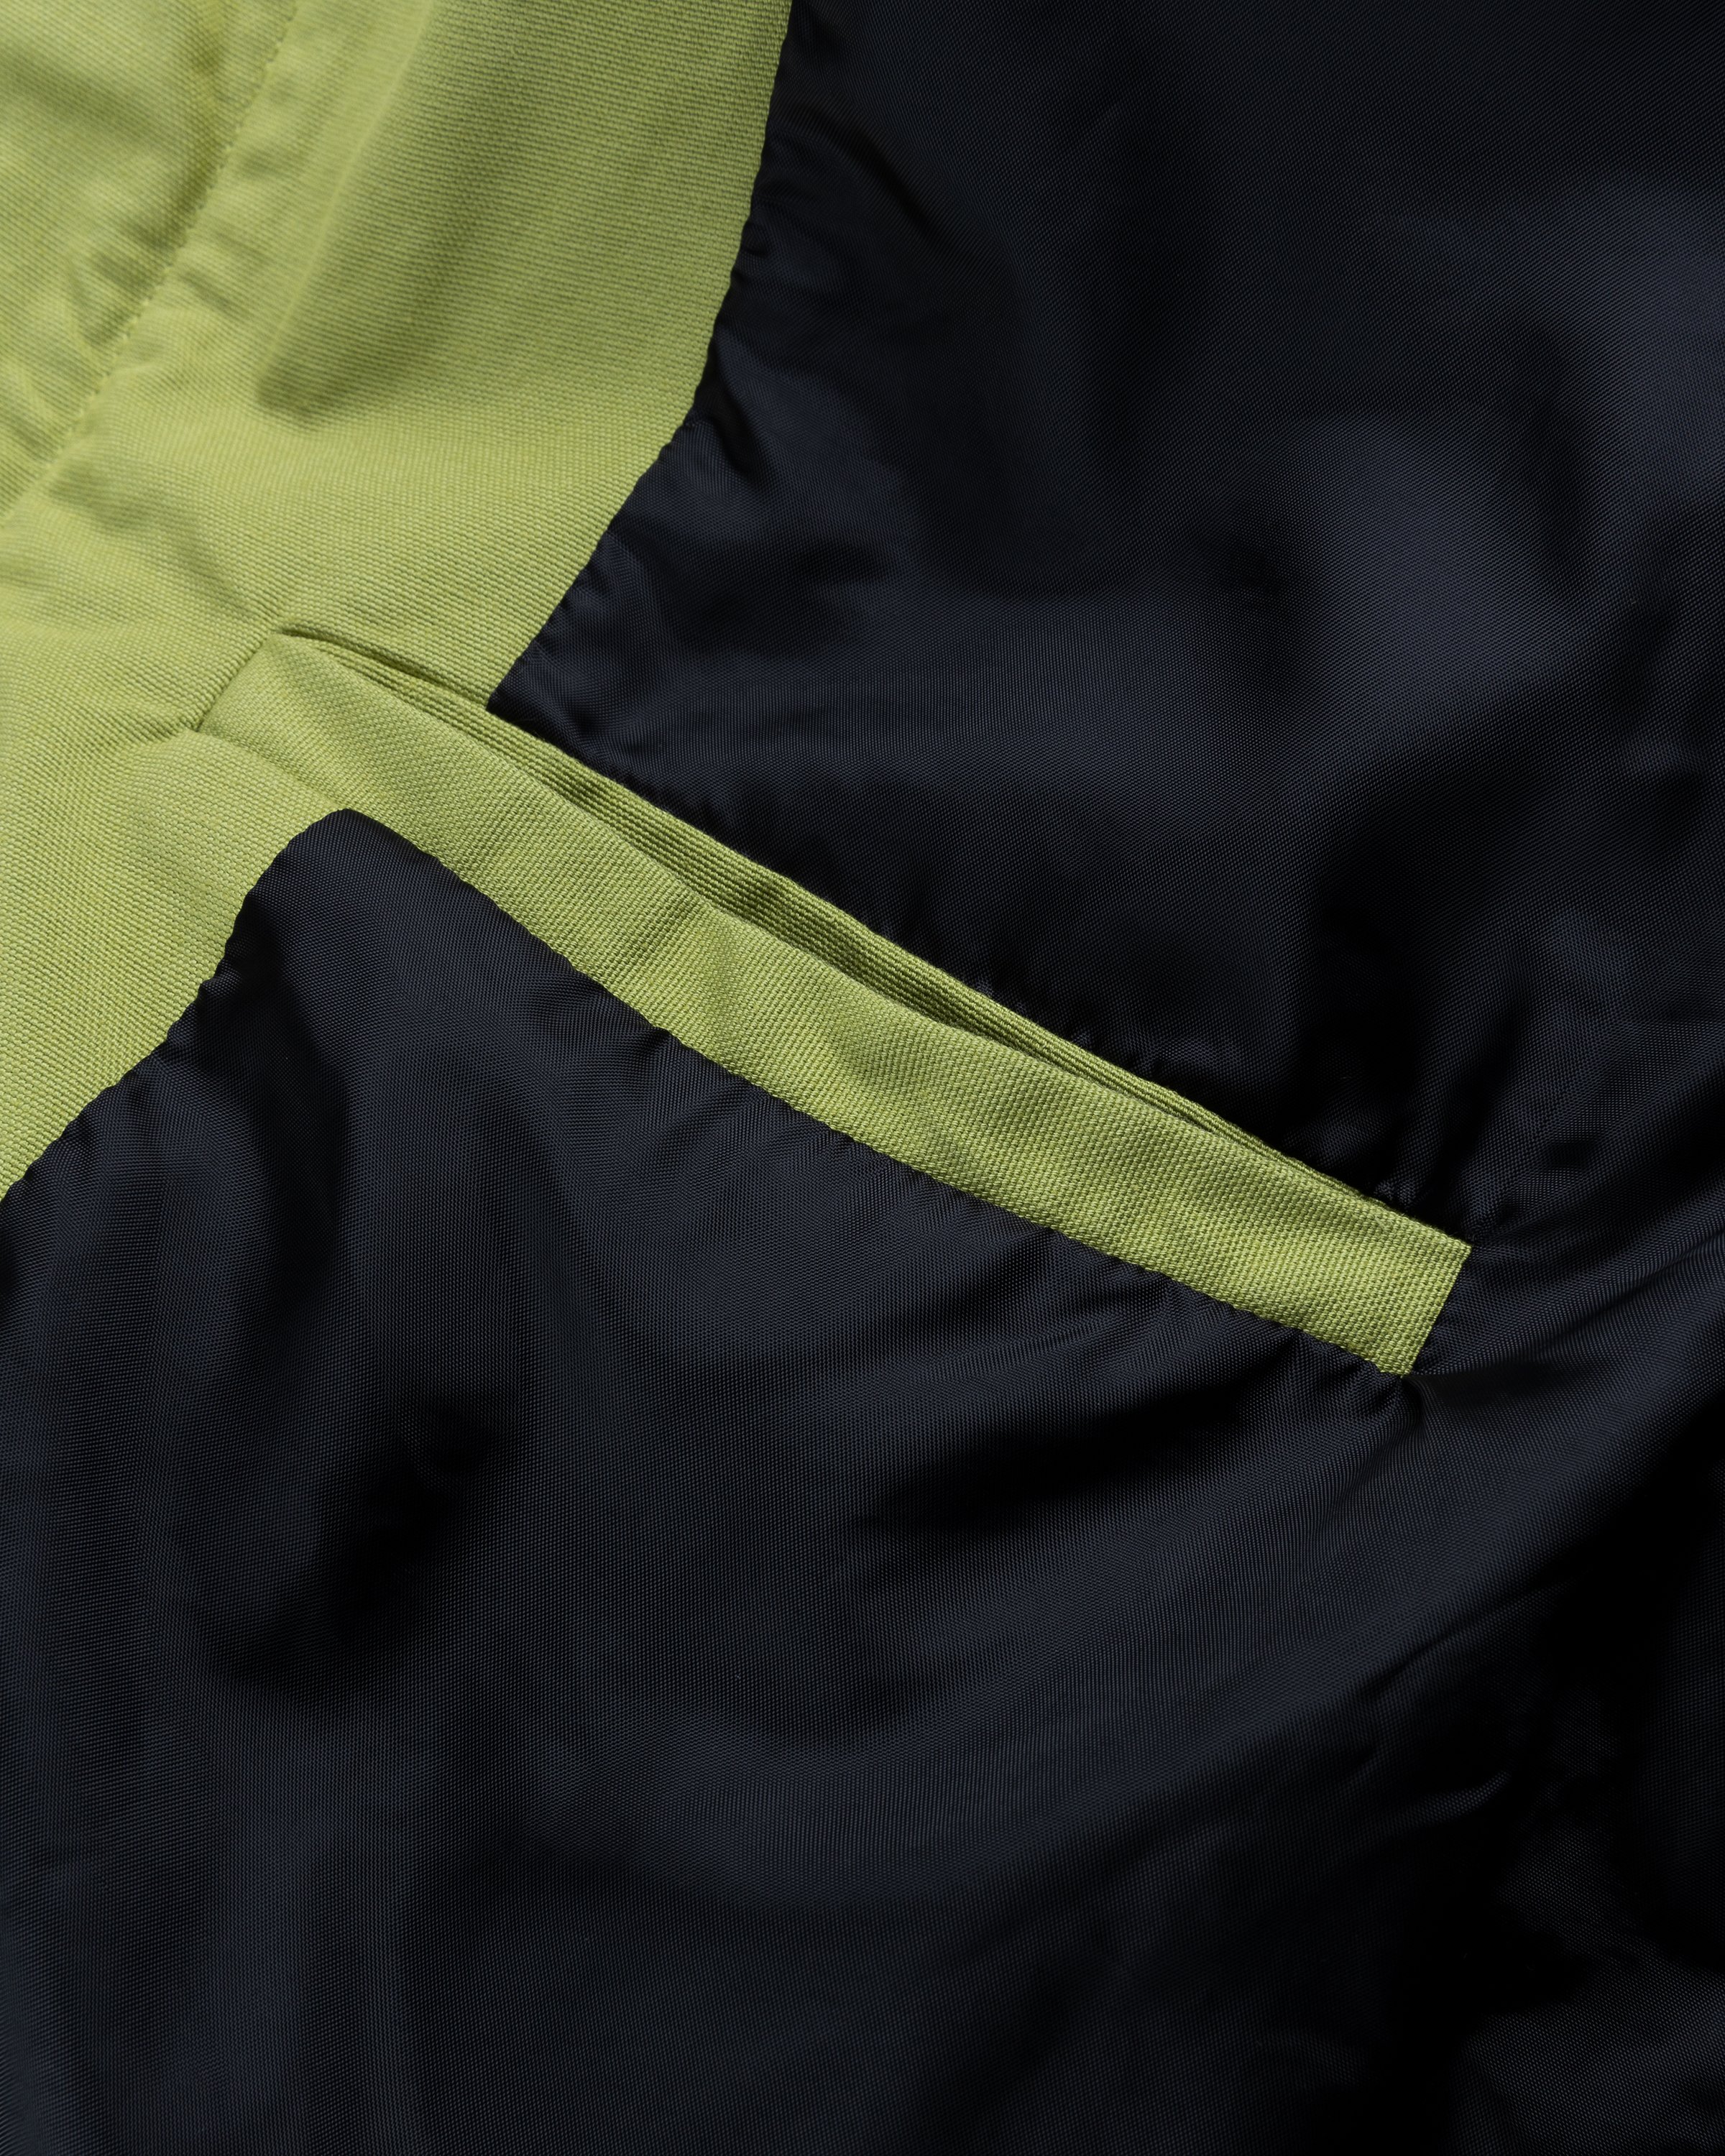 Winnie New York – Double Pocket Cotton Jacket Green | Highsnobiety Shop